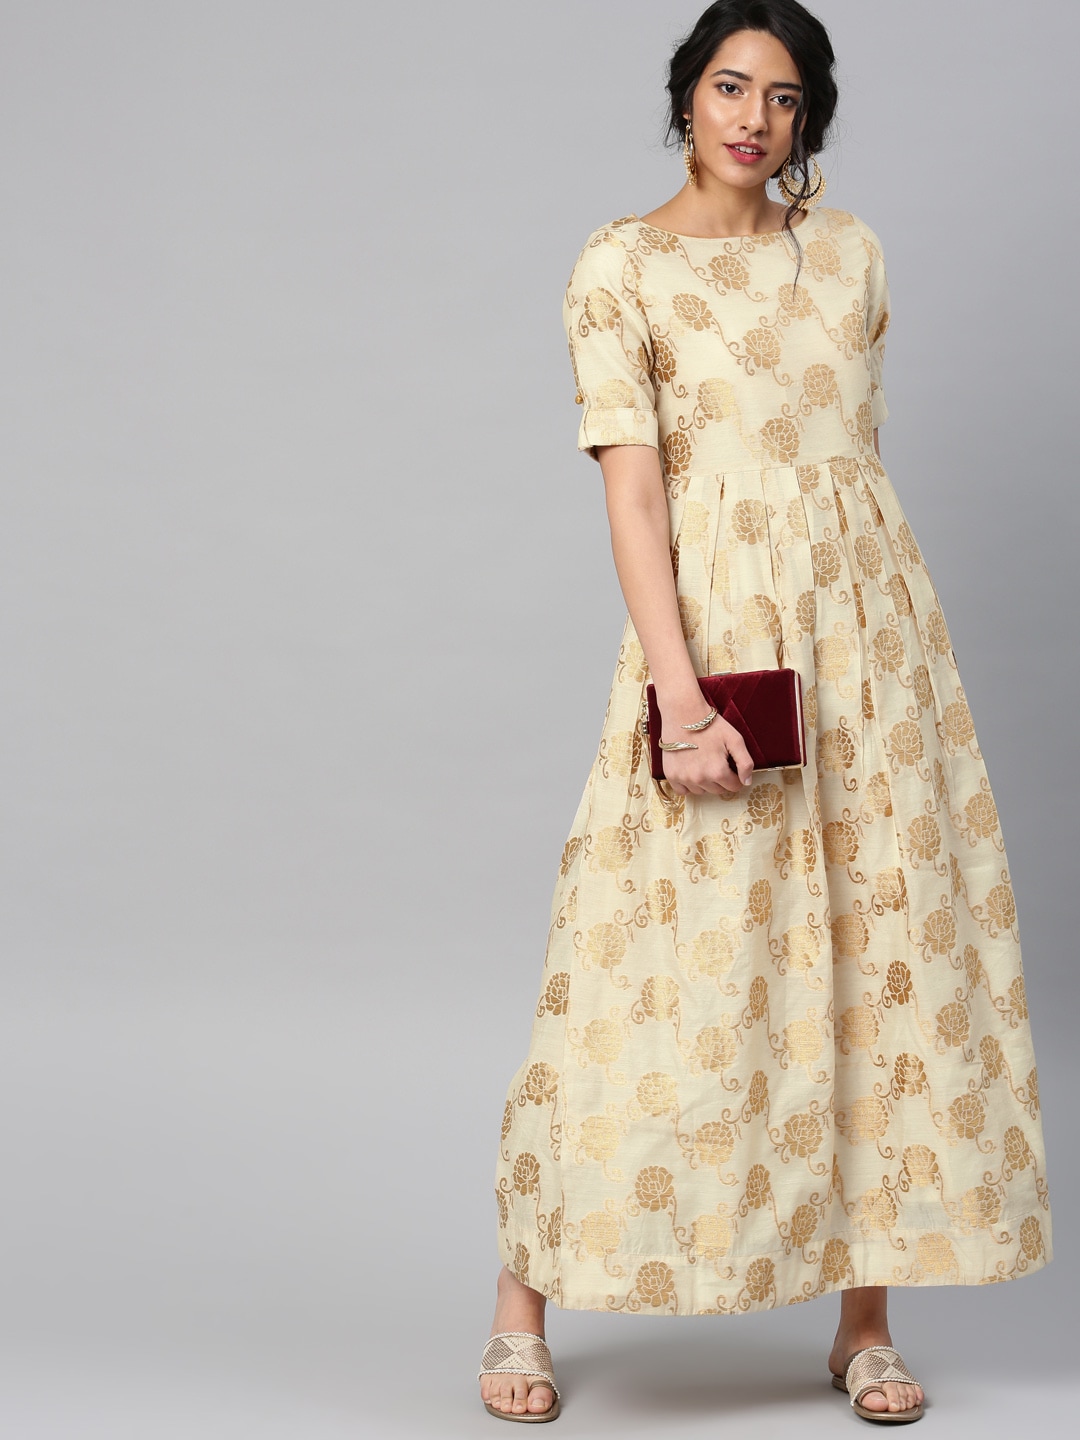 Vishudh Women Cream-Coloured Printed Maxi Dress Price in India